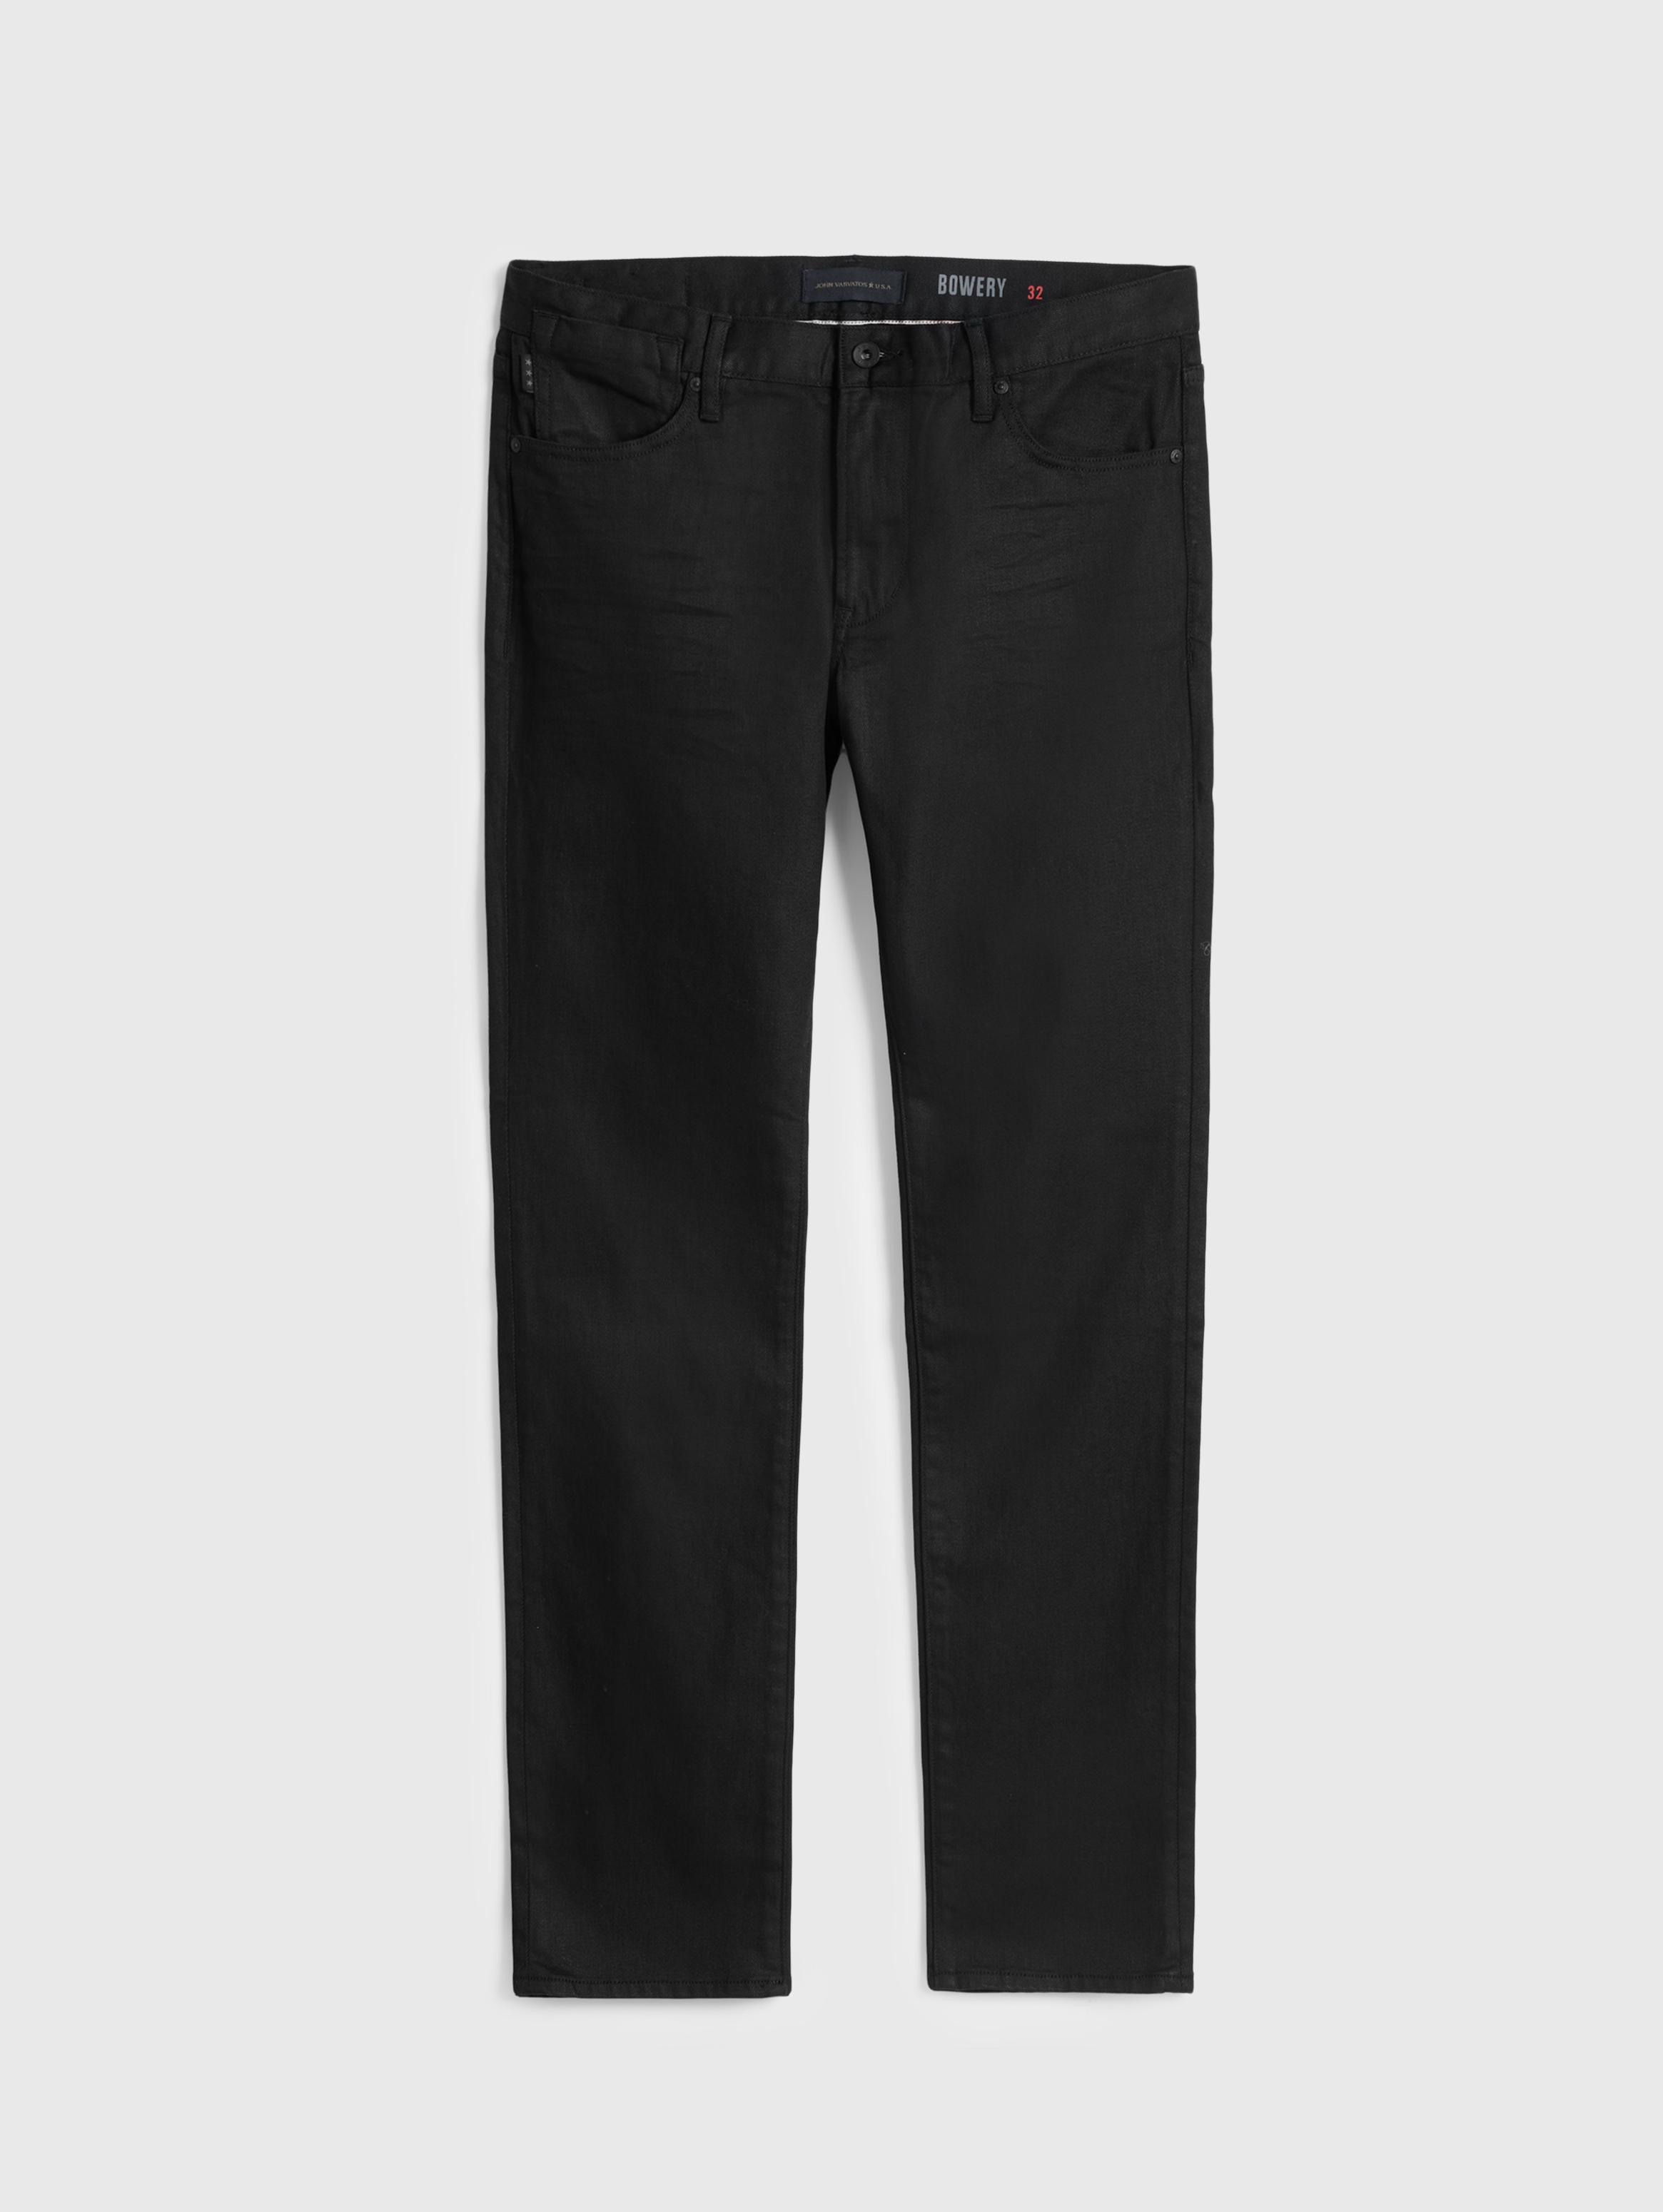 Men/'s John Varvatos Black Denim Wight Skinny Jeans Size 32 x 32 BLKD PF18